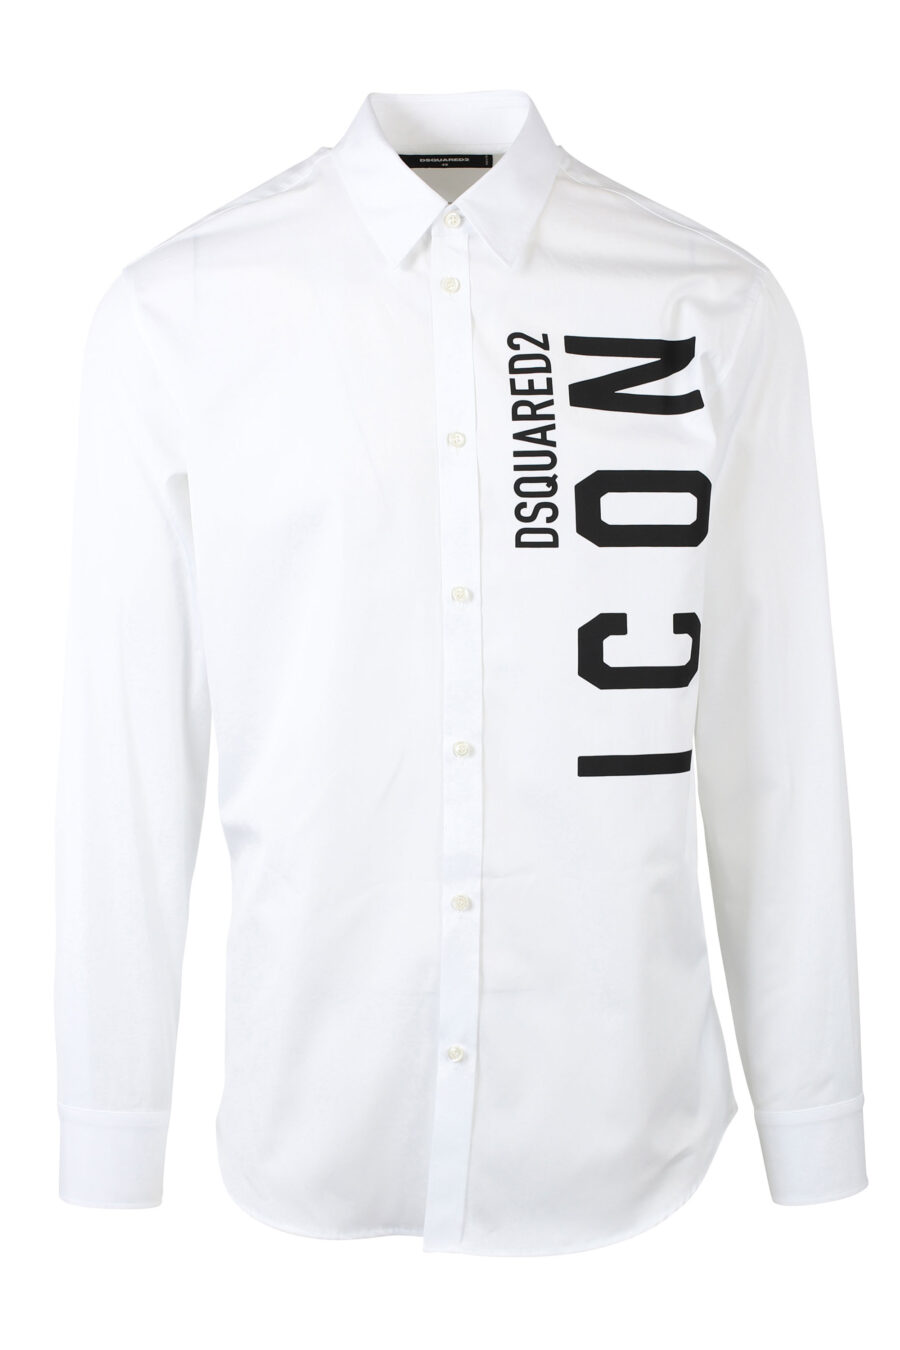 Camisa branca com logótipo duplo vertical "ícone" - IMG 0784